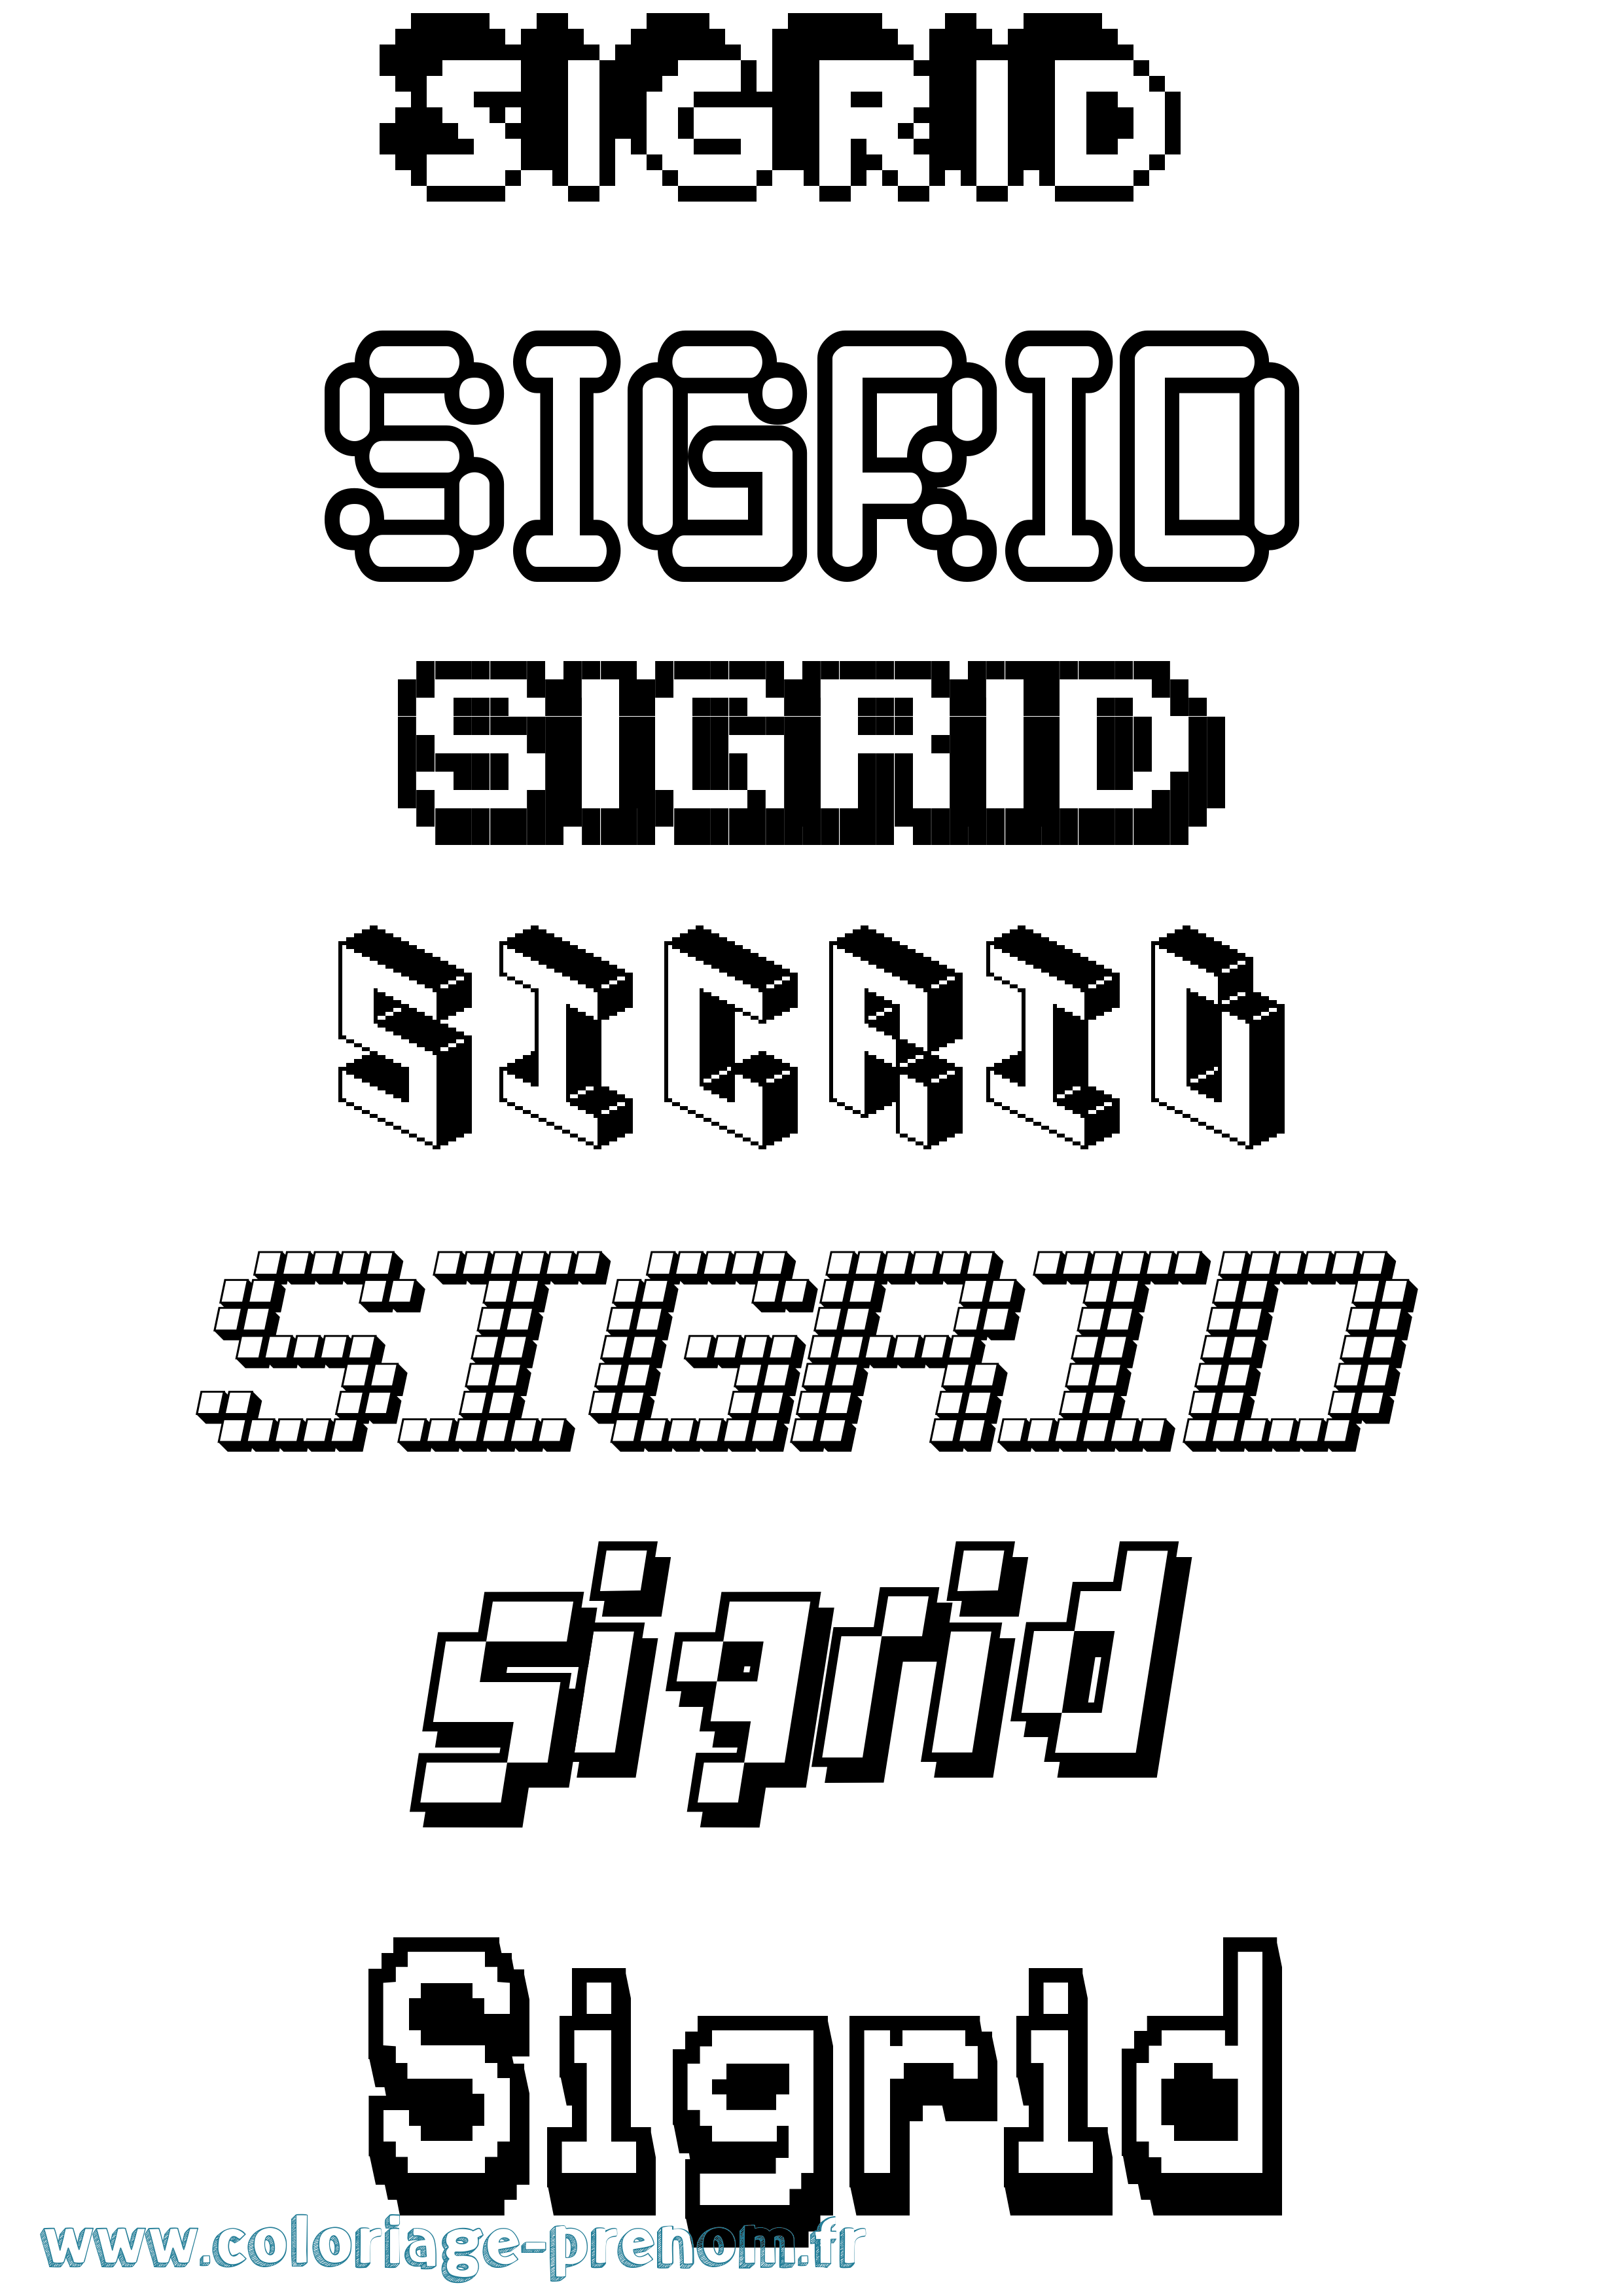 Coloriage prénom Sigrid Pixel